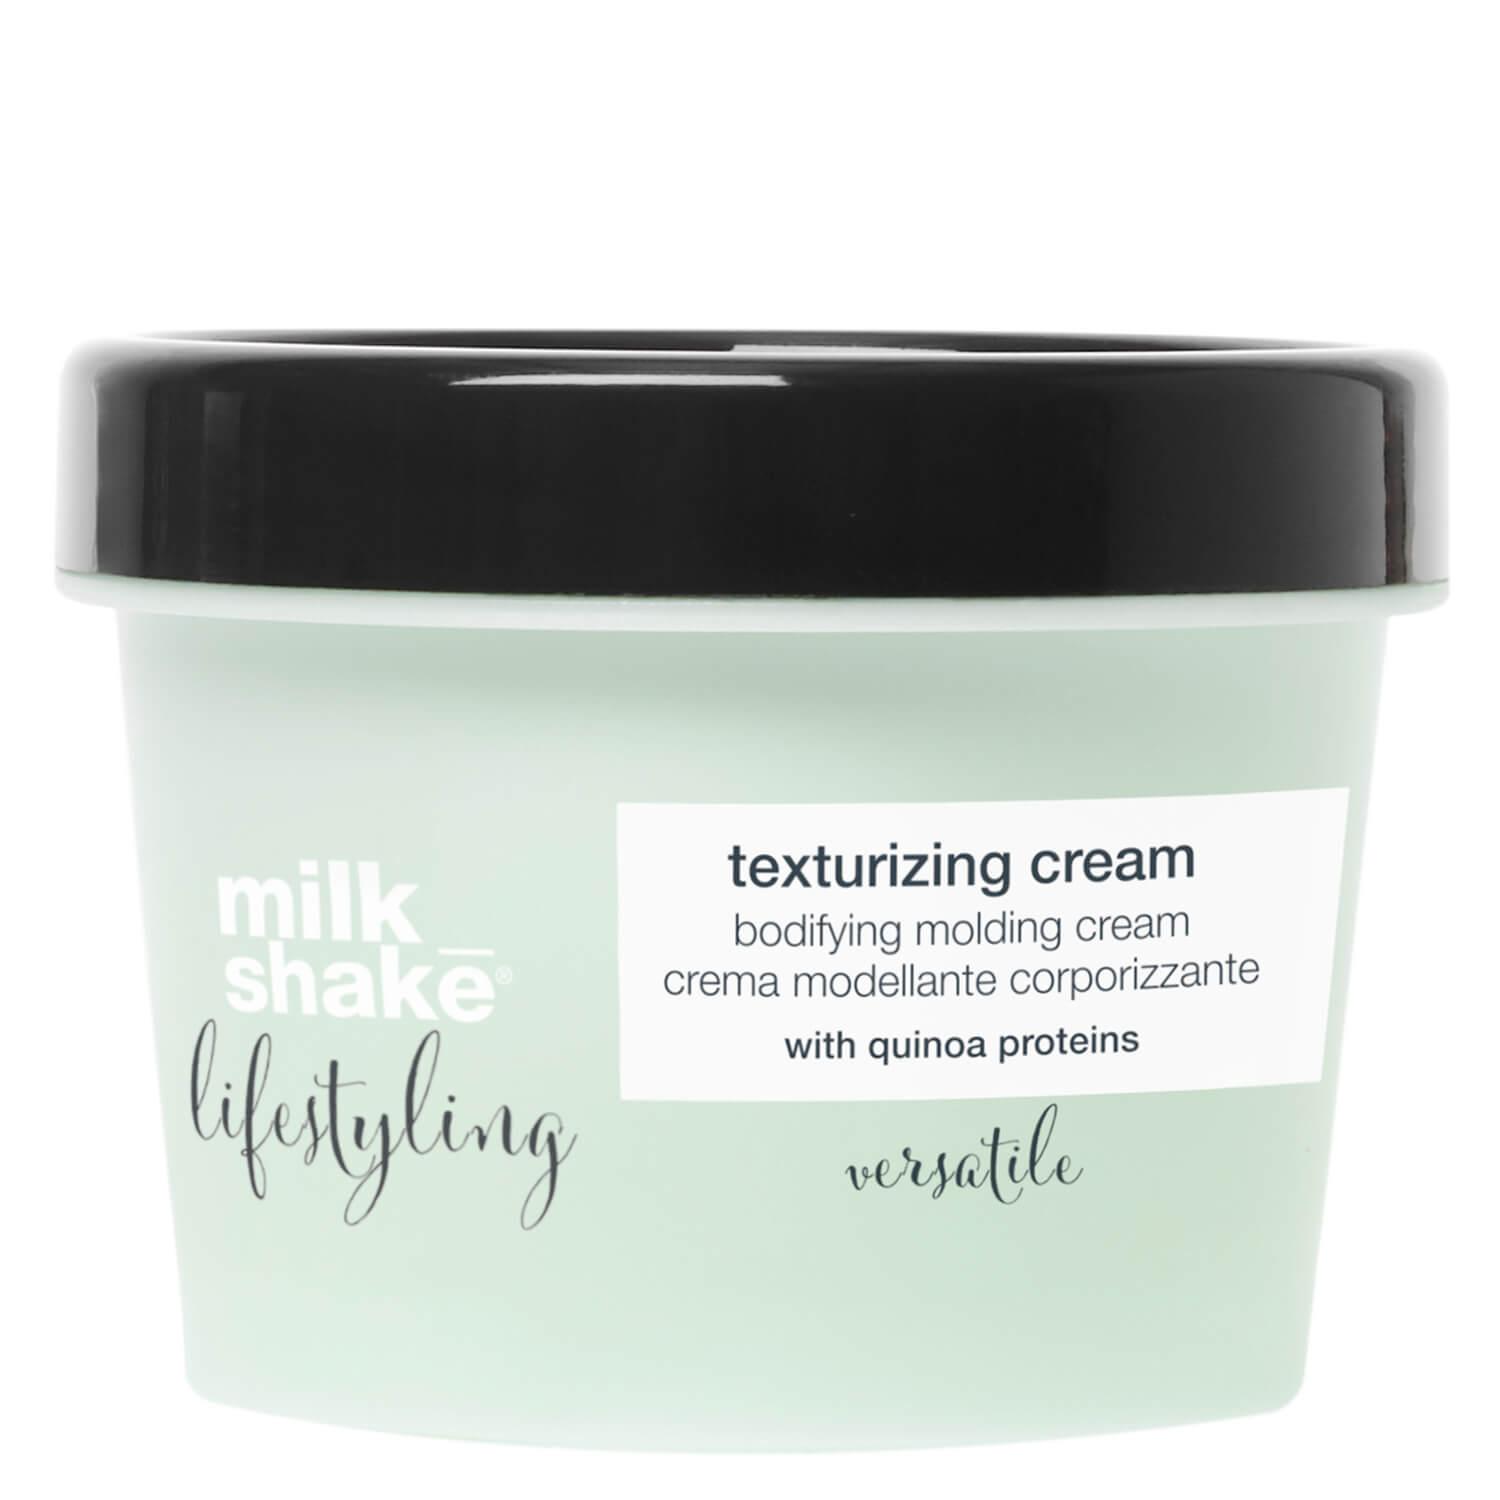 milk_shake lifestyling - texturizing cream 